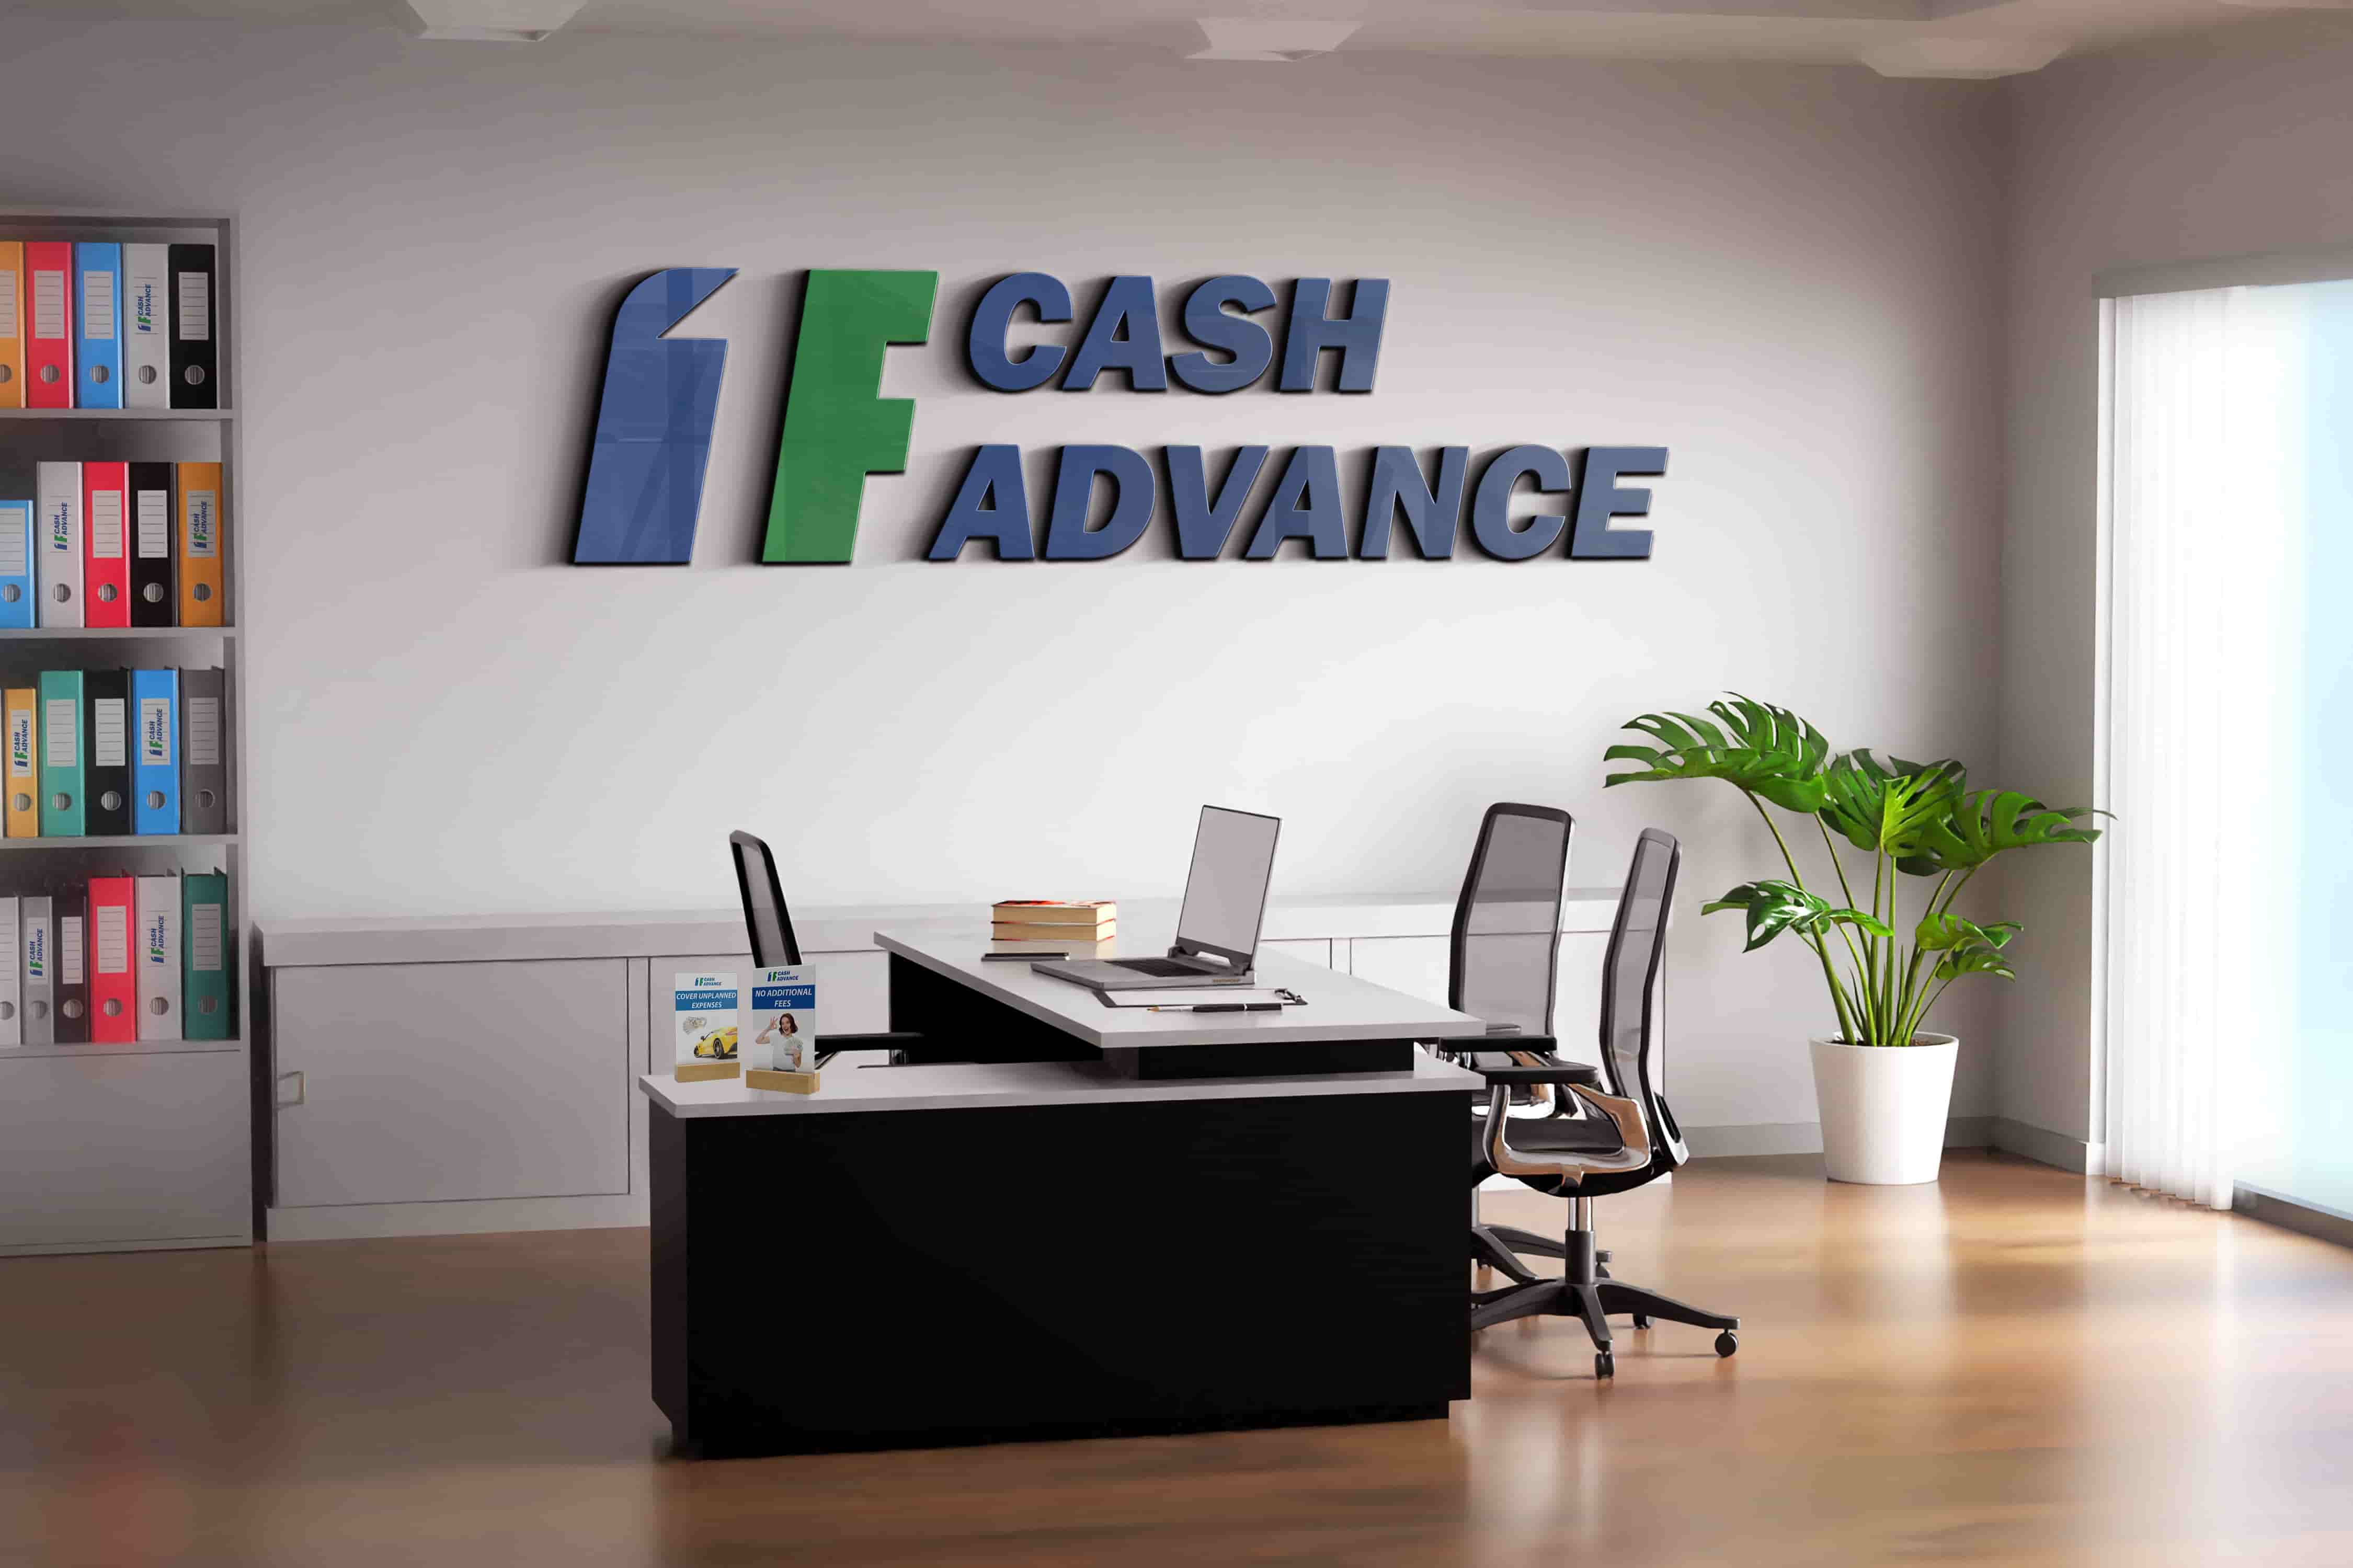 Cash advance loans in Baton Rouge, LA 70816